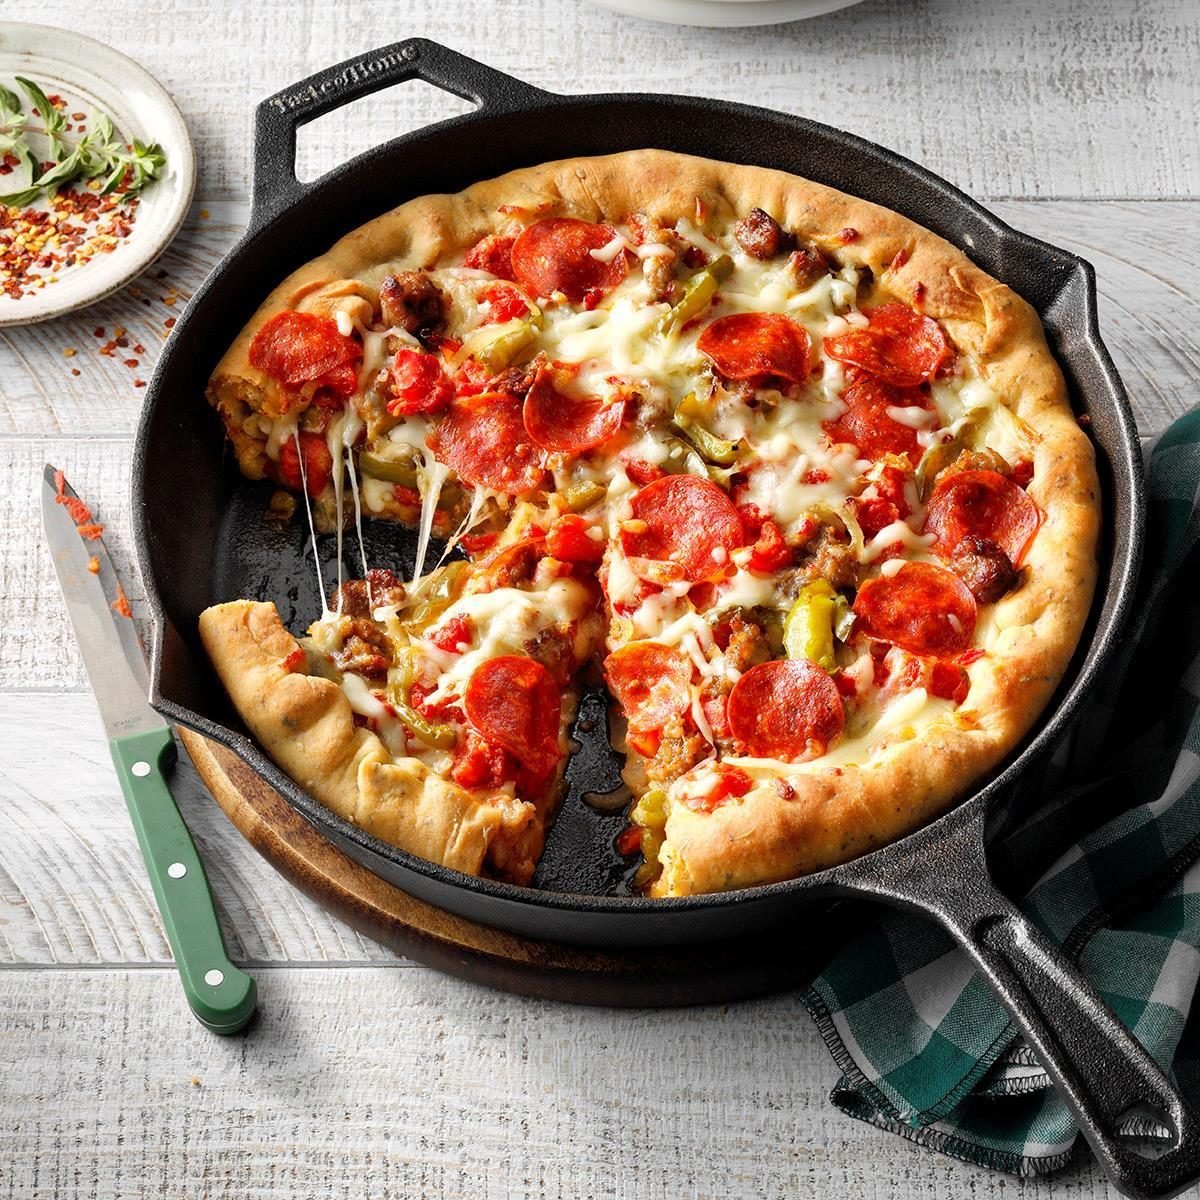 https://www.tasteofhome.com/wp-content/uploads/2018/01/Deep-Dish-Sausage-Pizza_EXPS_TOHFRBZ19_9861_E04_10_2b-1.jpg?fit=700%2C1024